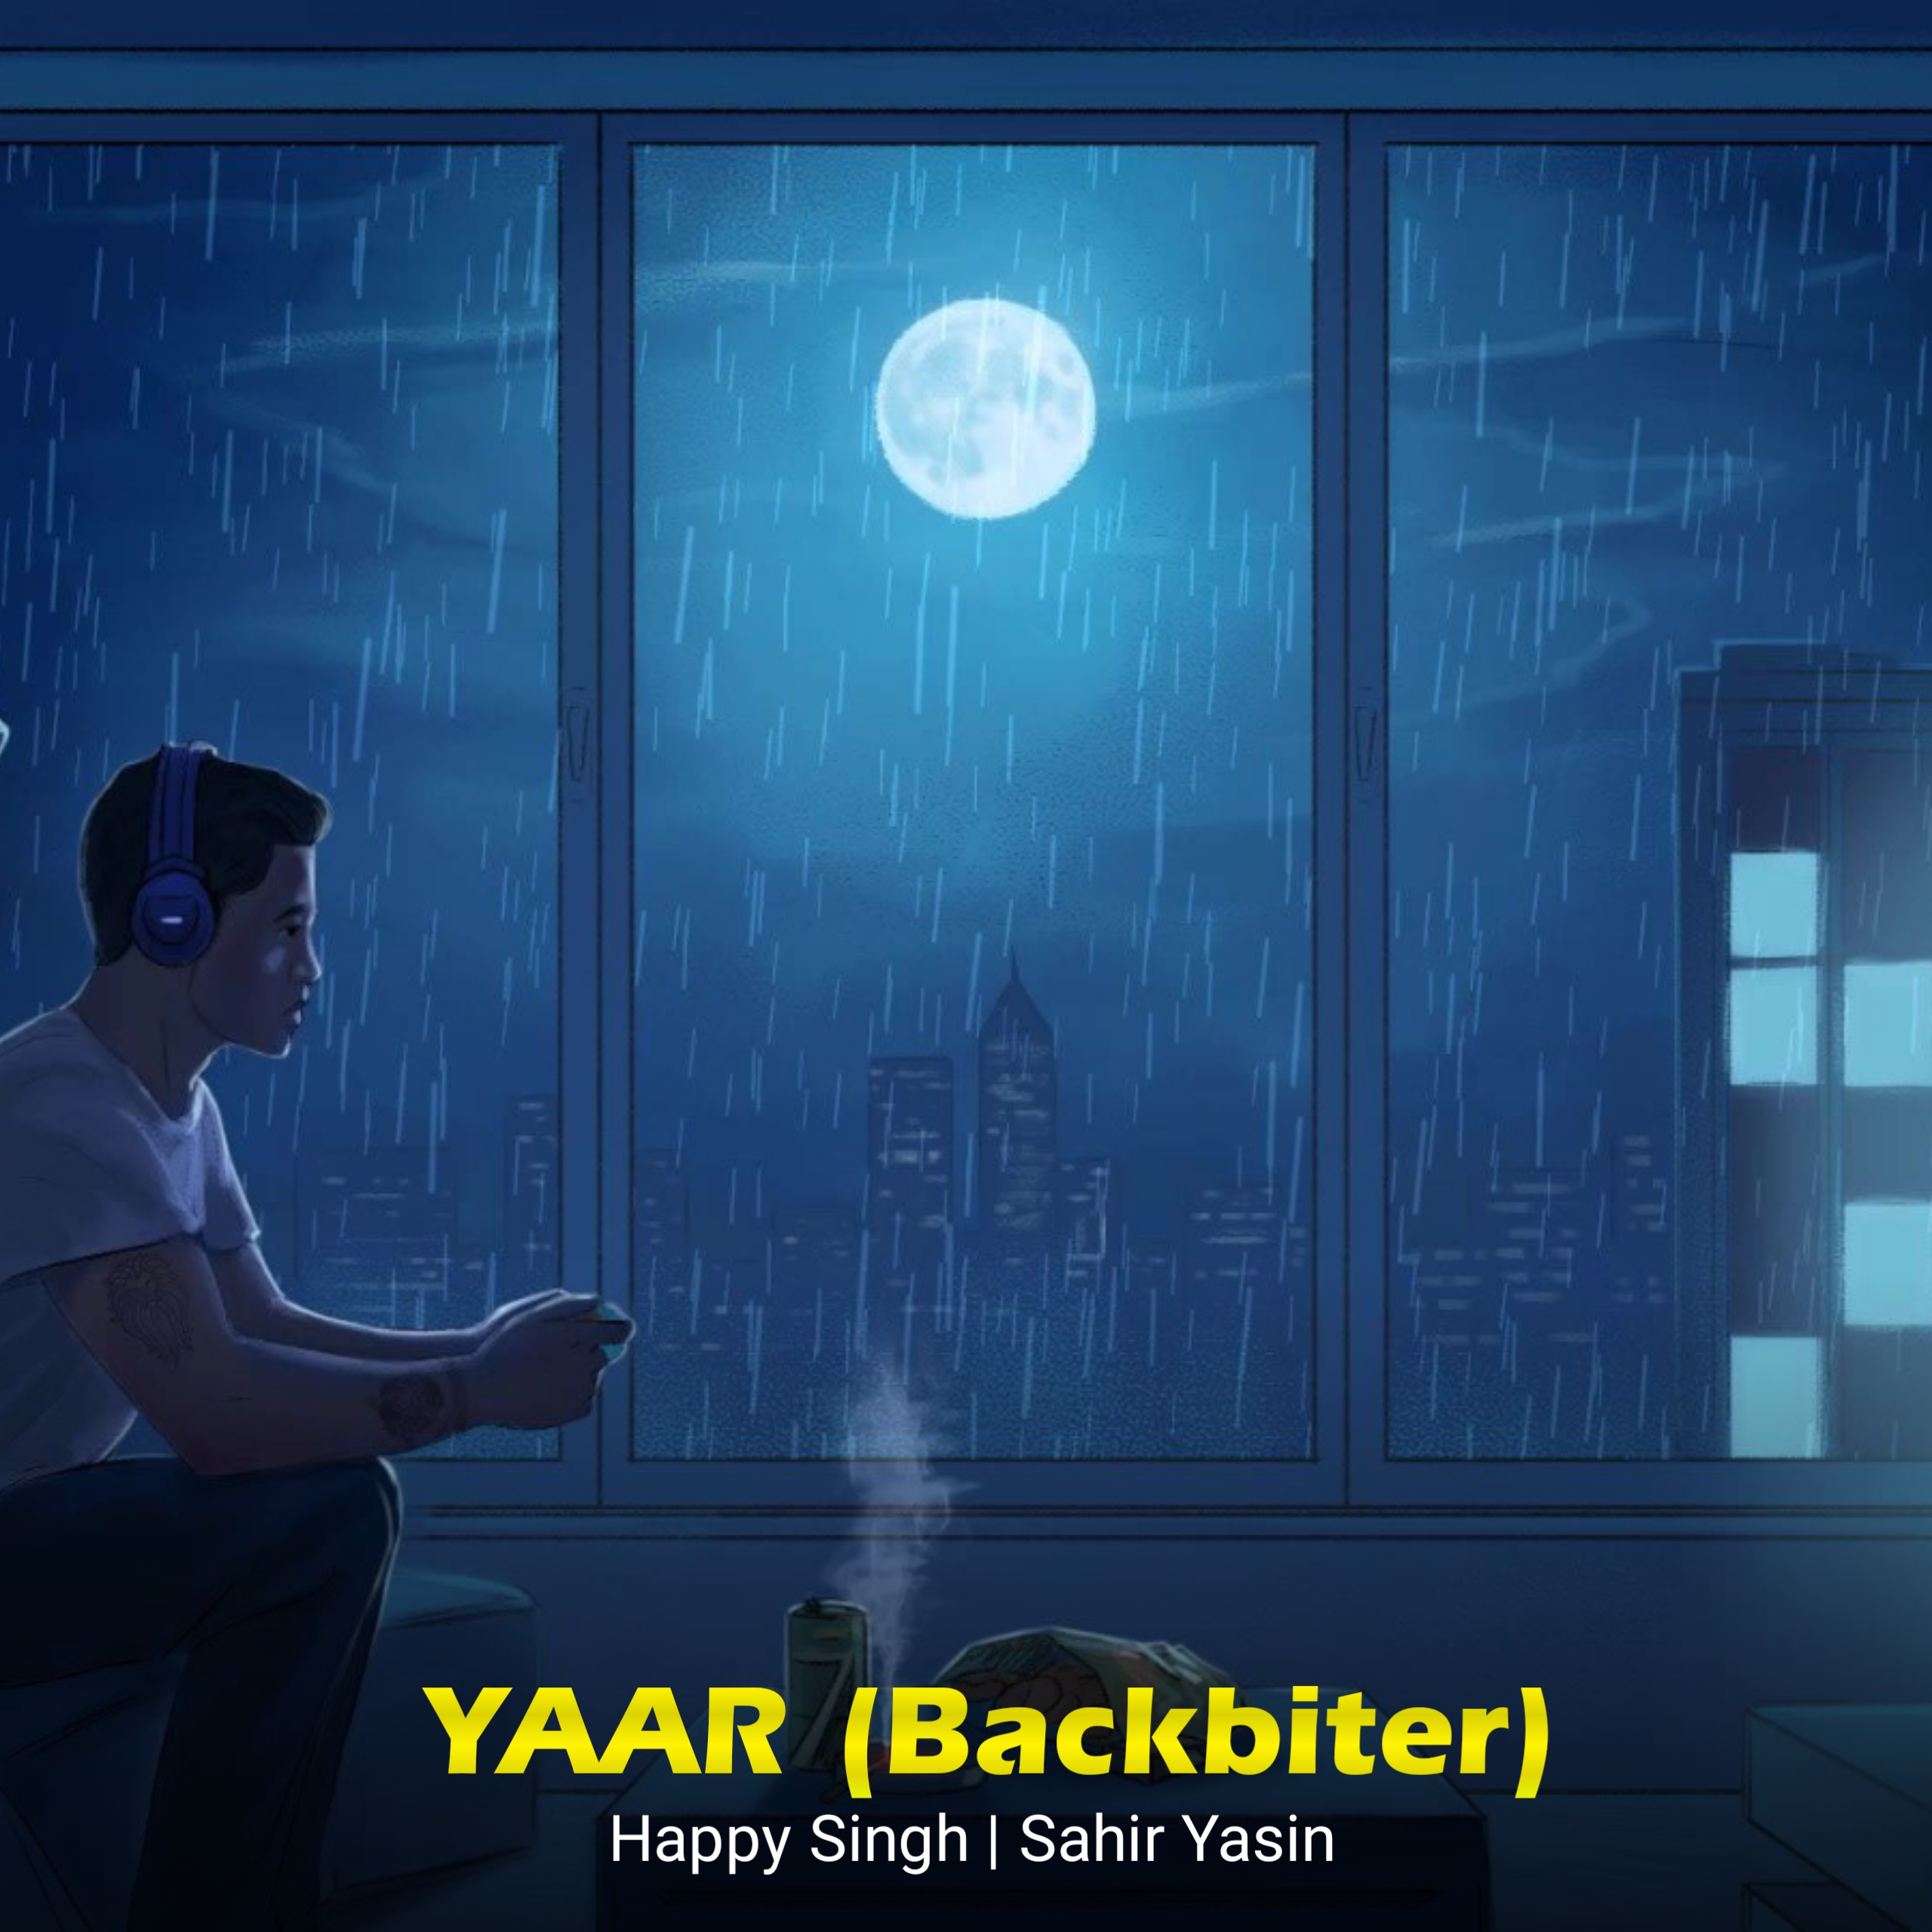 Yaar Backbitter Happy Singh Sahir Yasin